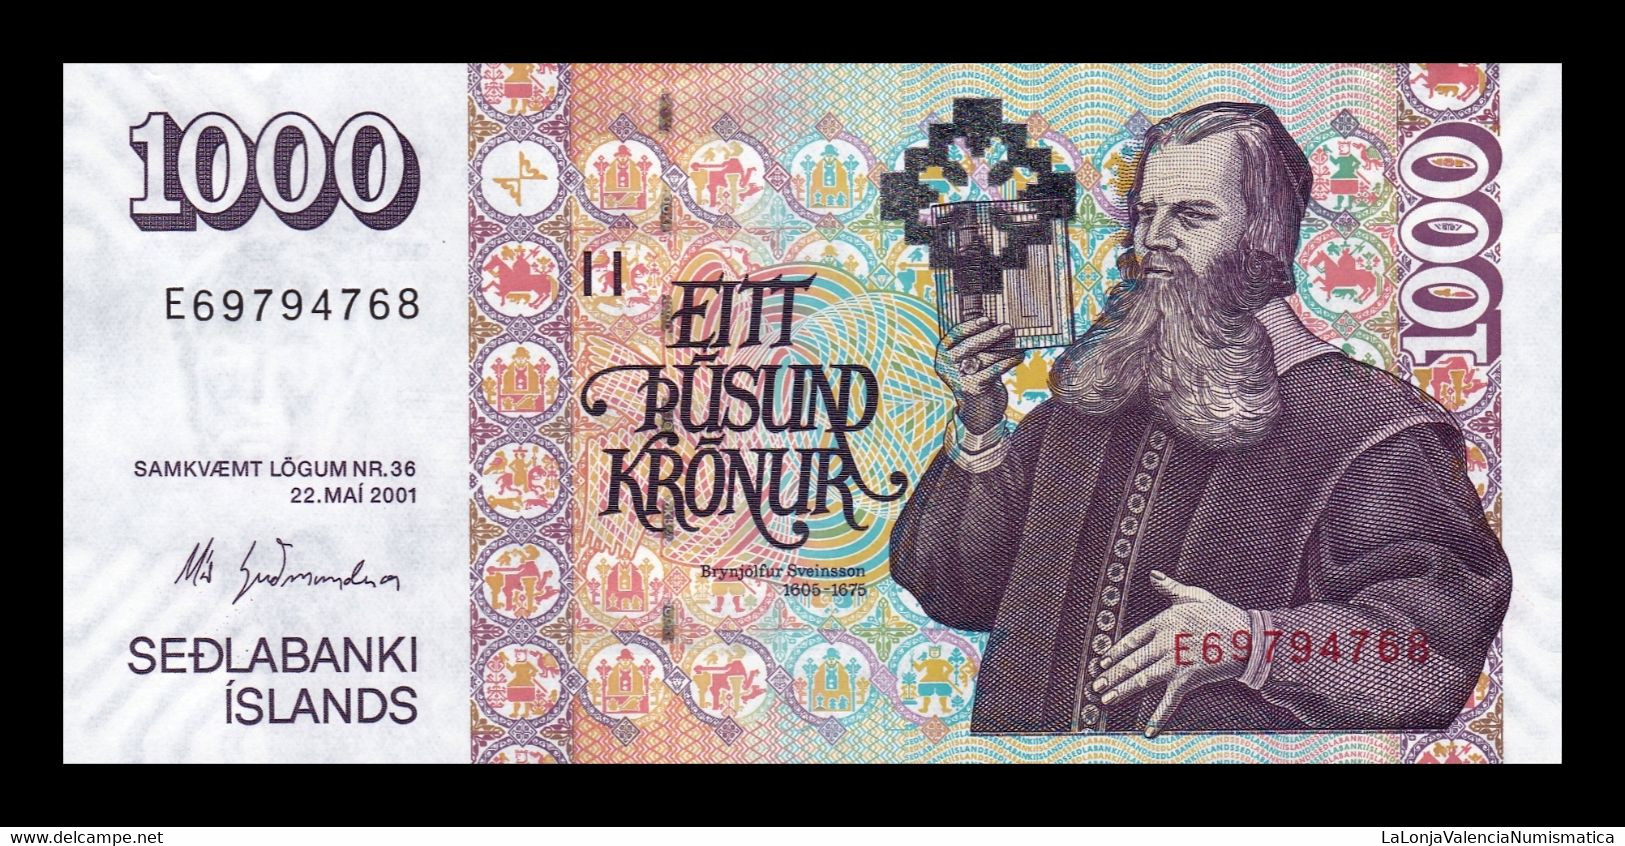 Islandia Iceland Lot 10 Banknotes 1000 Kronur 2001 (2013) Pick 59e SC UNC - Iceland